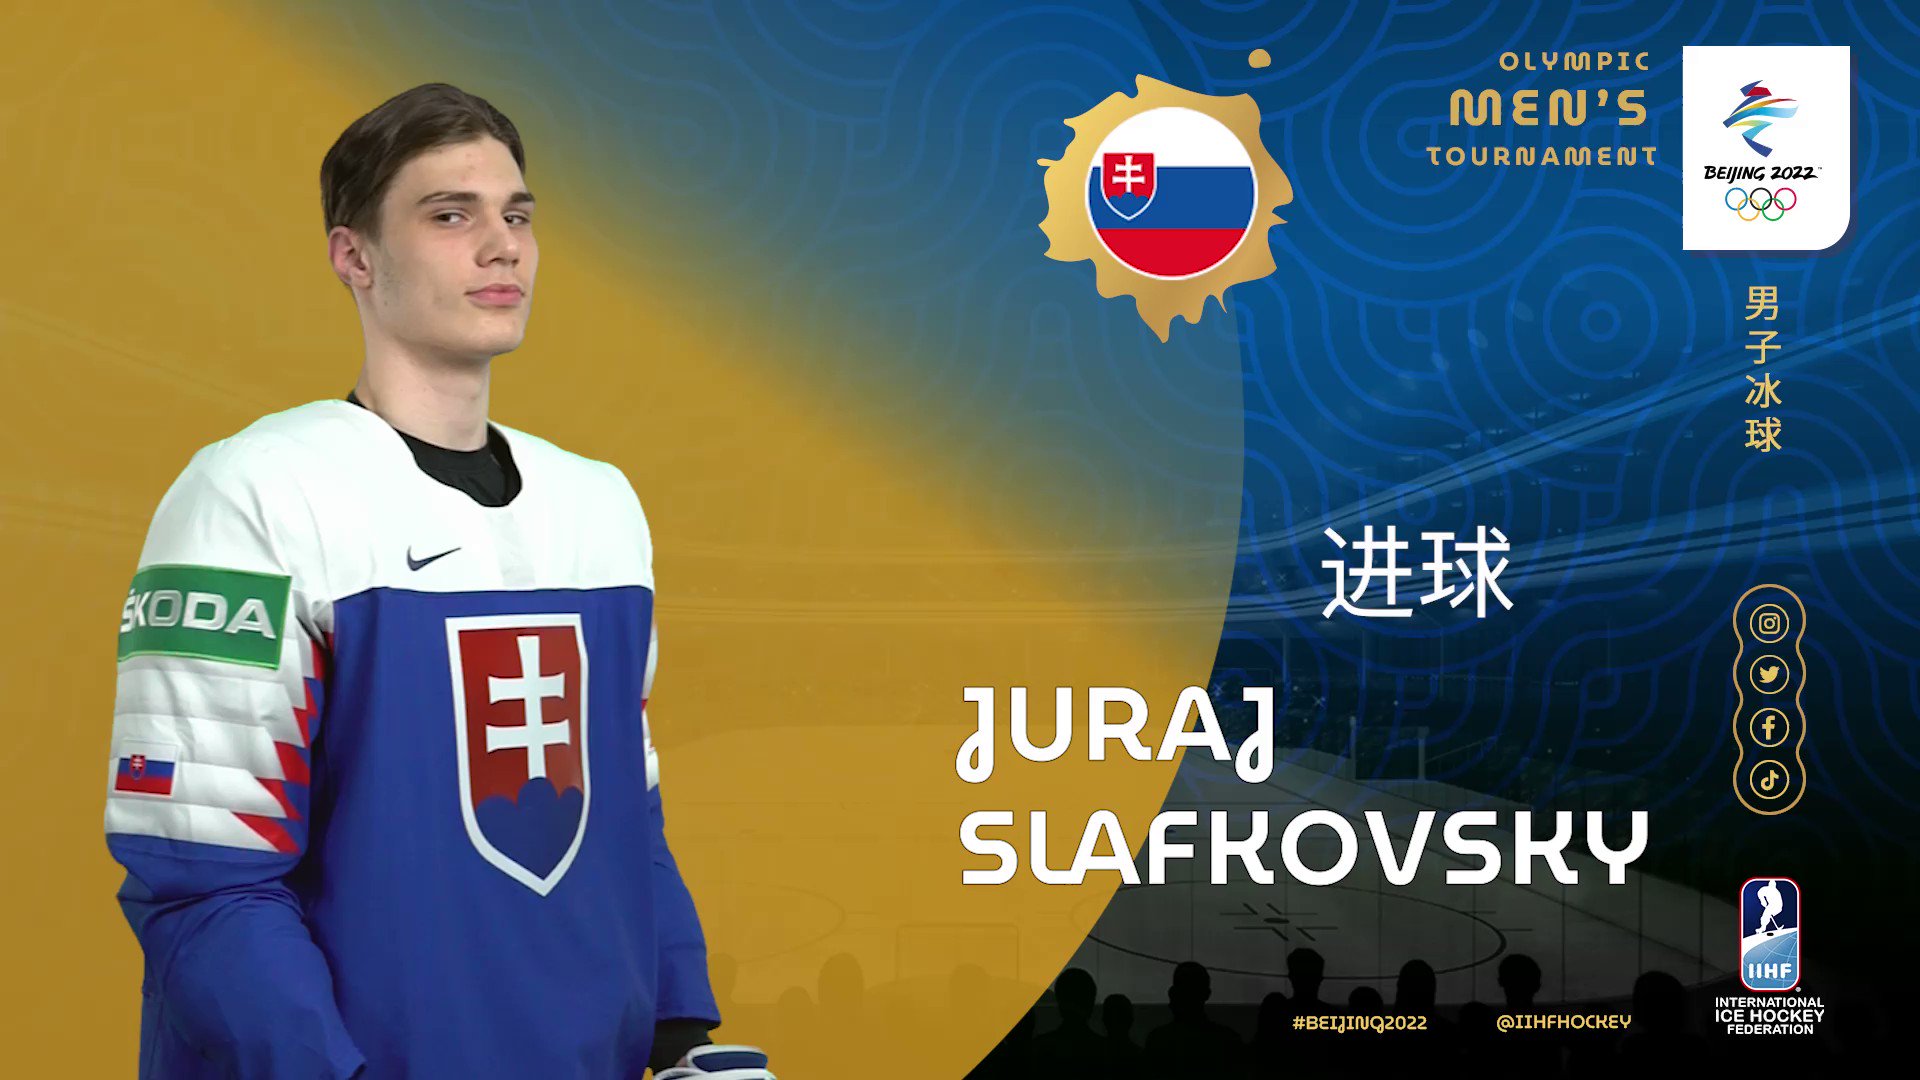 Juraj Slafkovsky plays also floorball, here he is in the finals of the  Slovak U19 floorball league last year : r/hockey